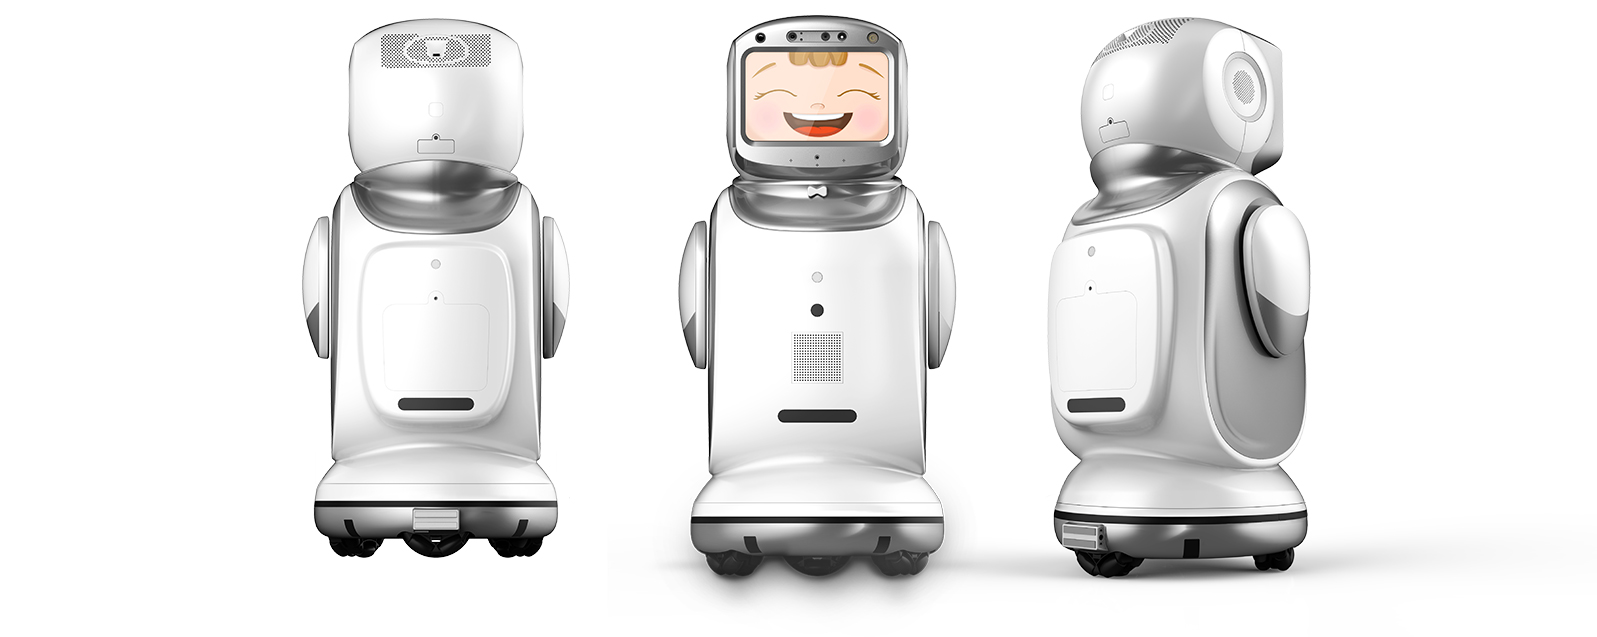 home service robot, companion robot, smart home robot